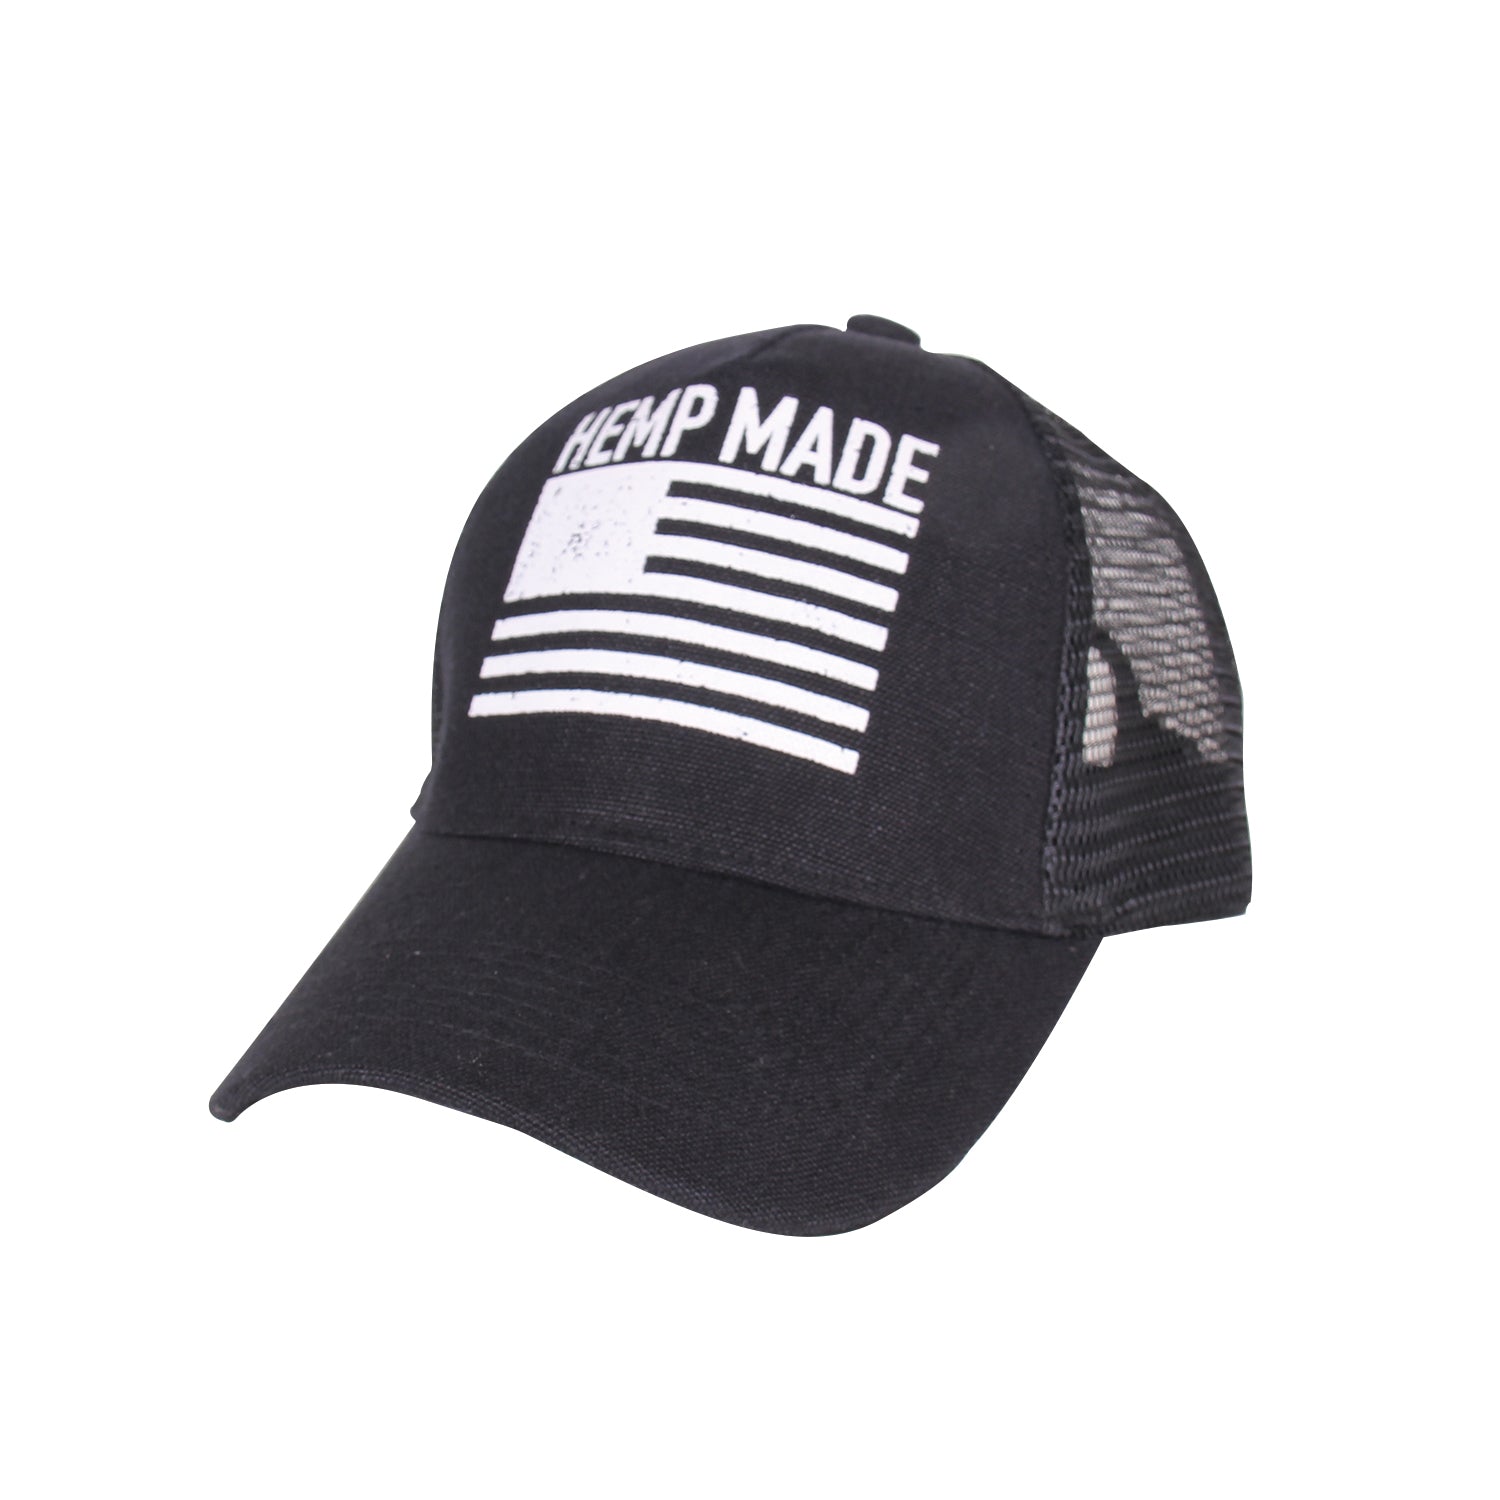 Trucker Hat HEMP MADE (Black) - Hemptique